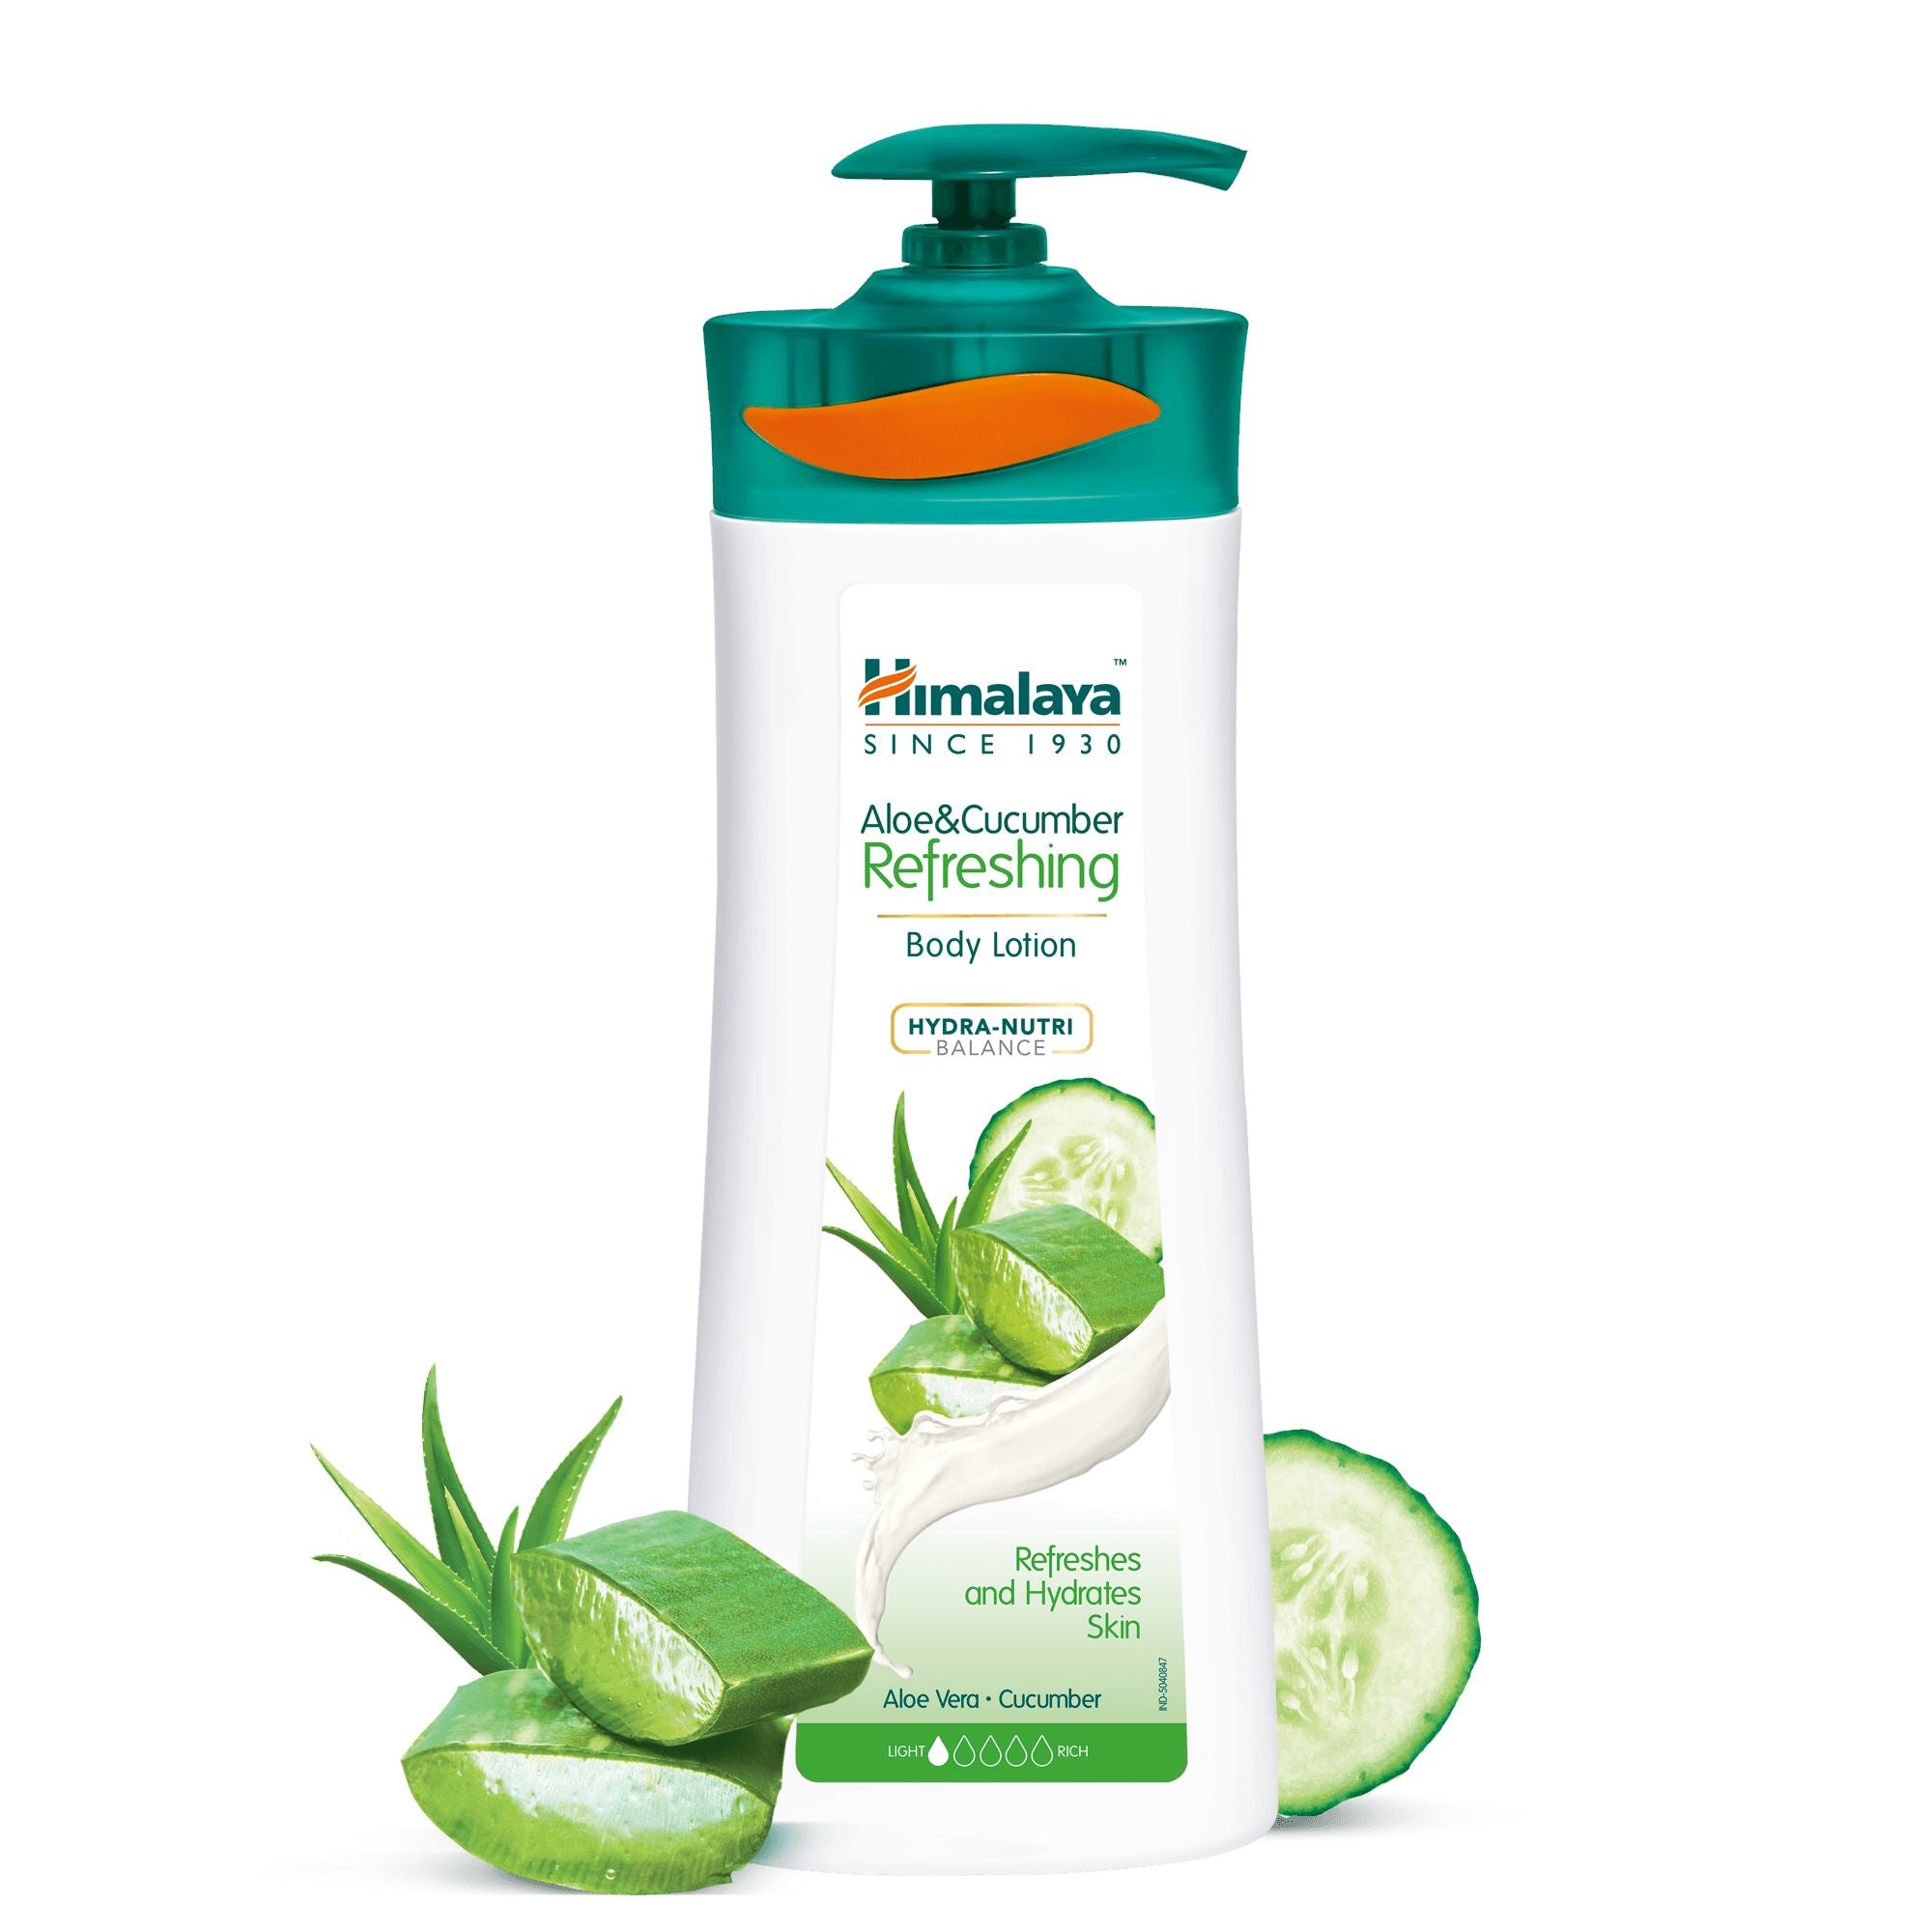 Himalaya Aloe & Cucumber Refreshing Body Lotion 400ml - Hydrates and refreshes skin 